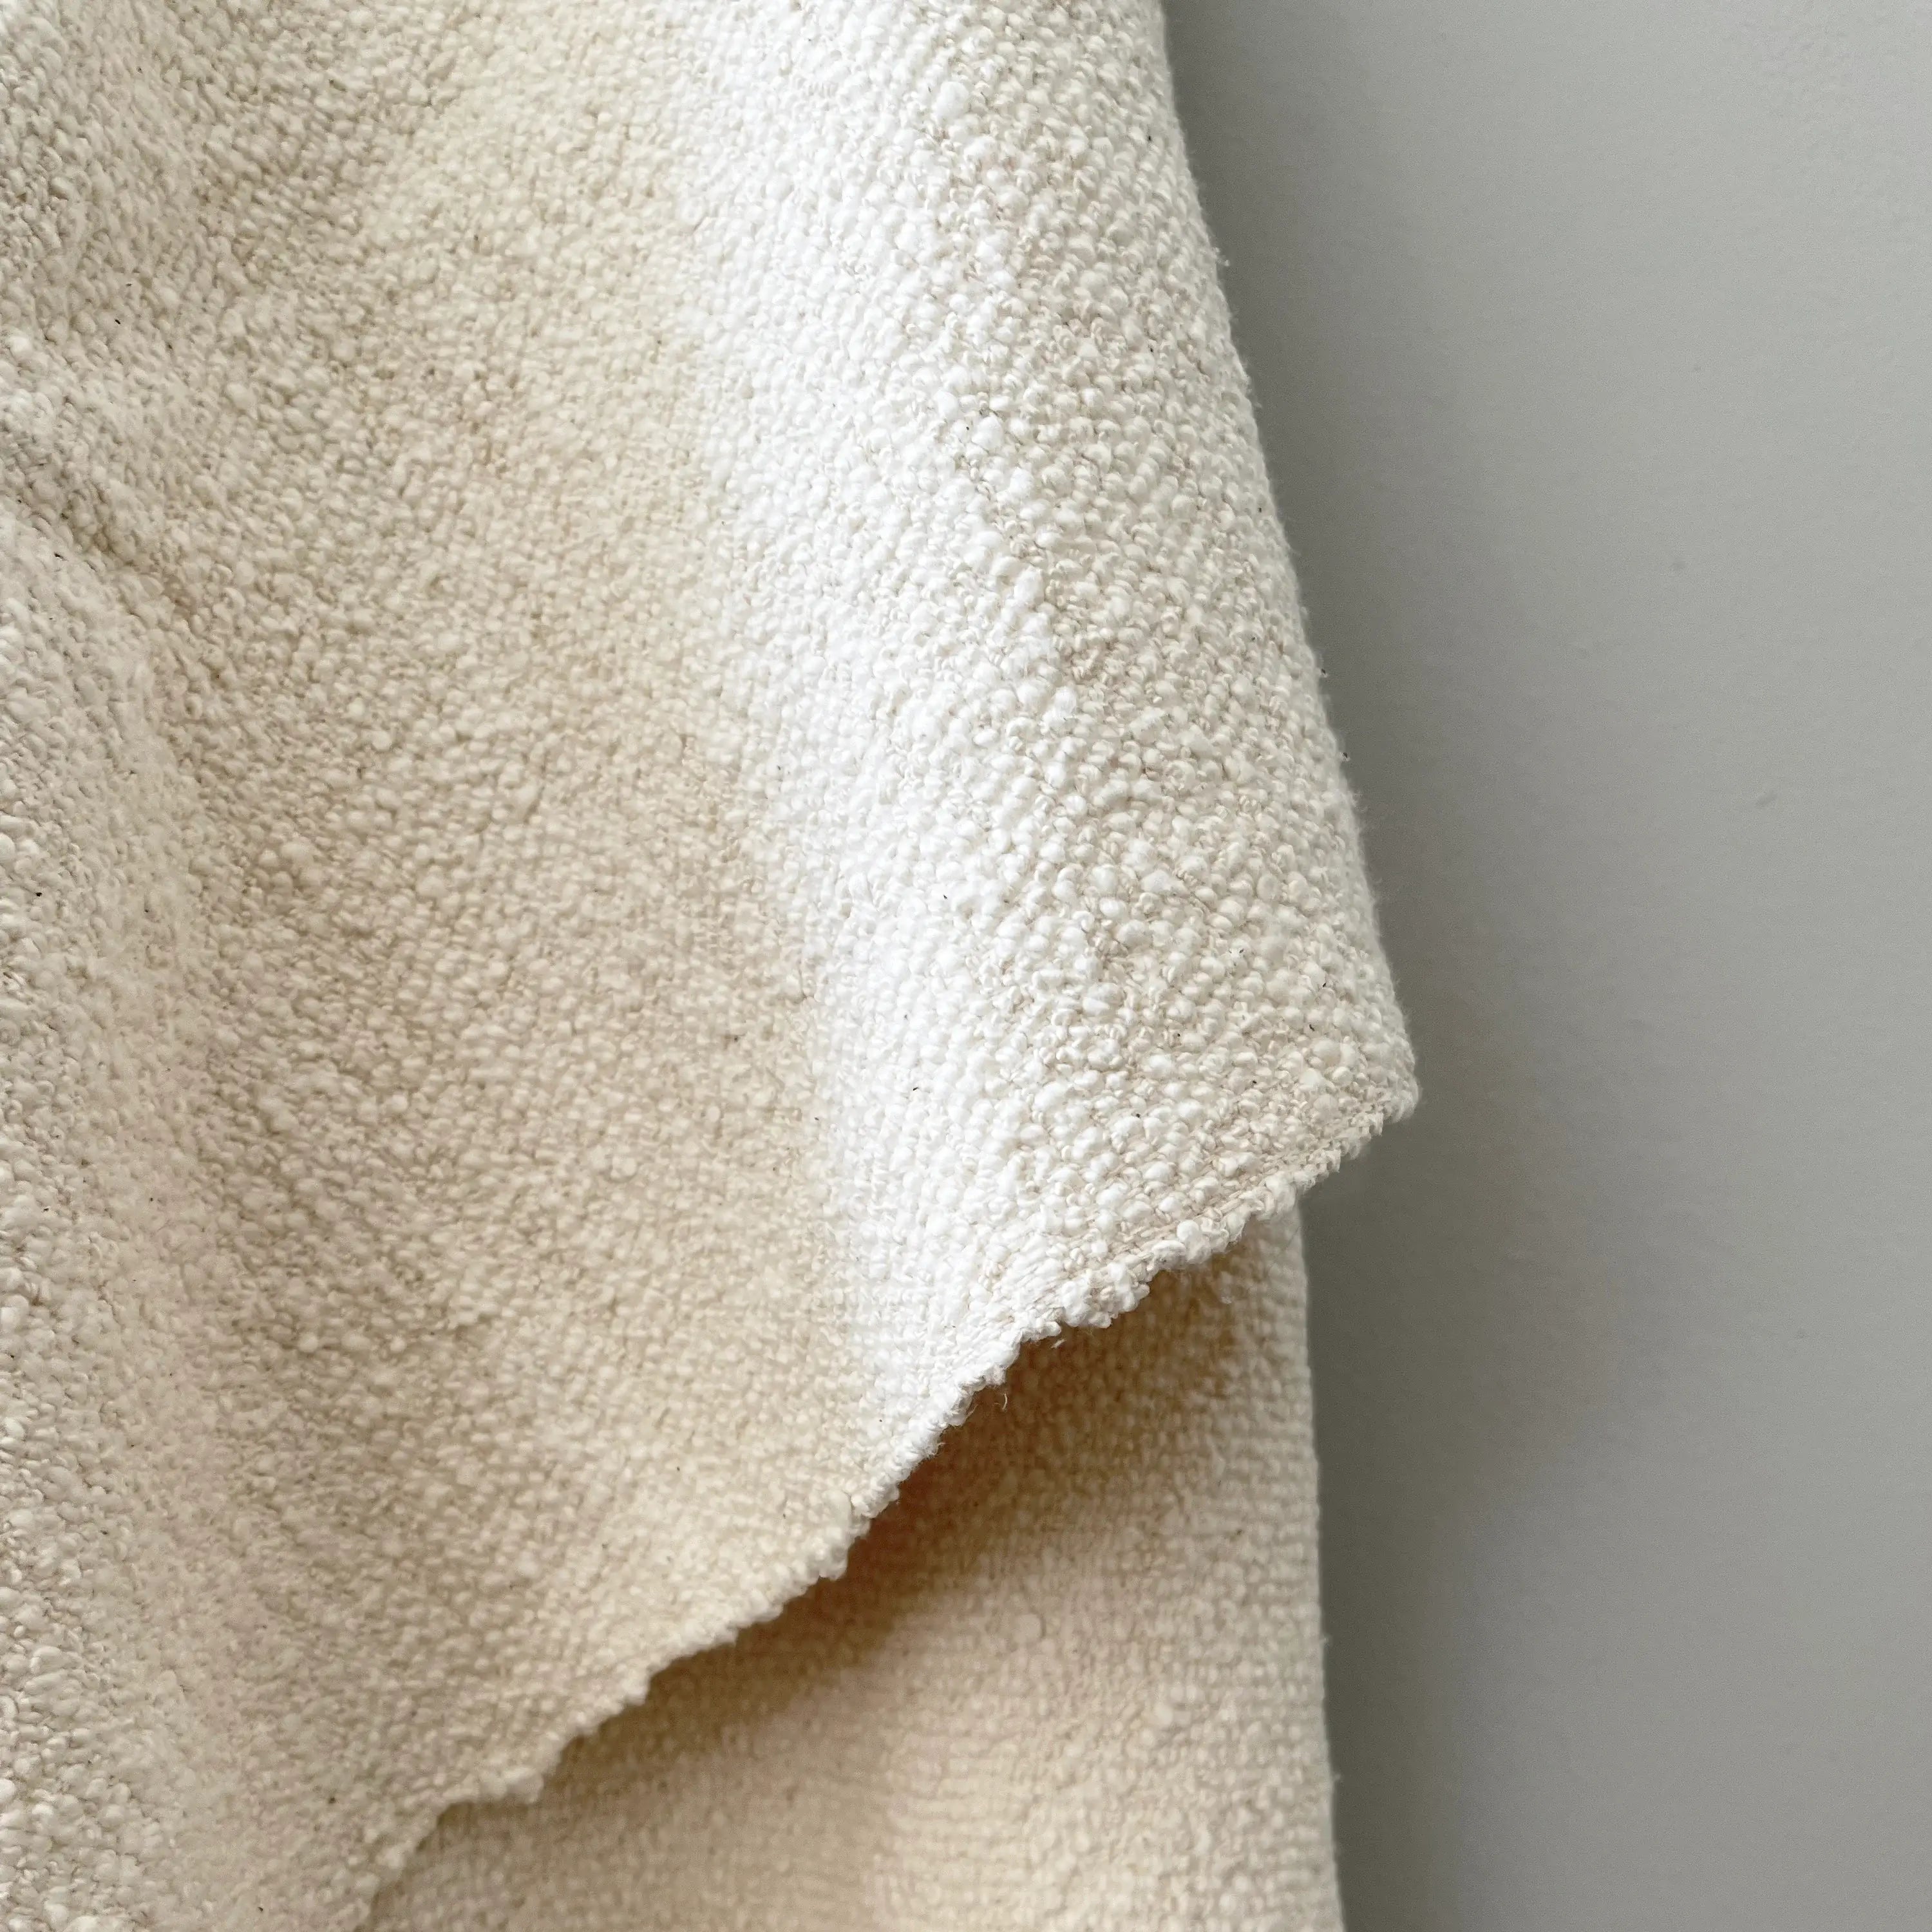 Dounia home bath/ beach towel in Ivory made of Organic cotton, Model: Baya, Close Up View